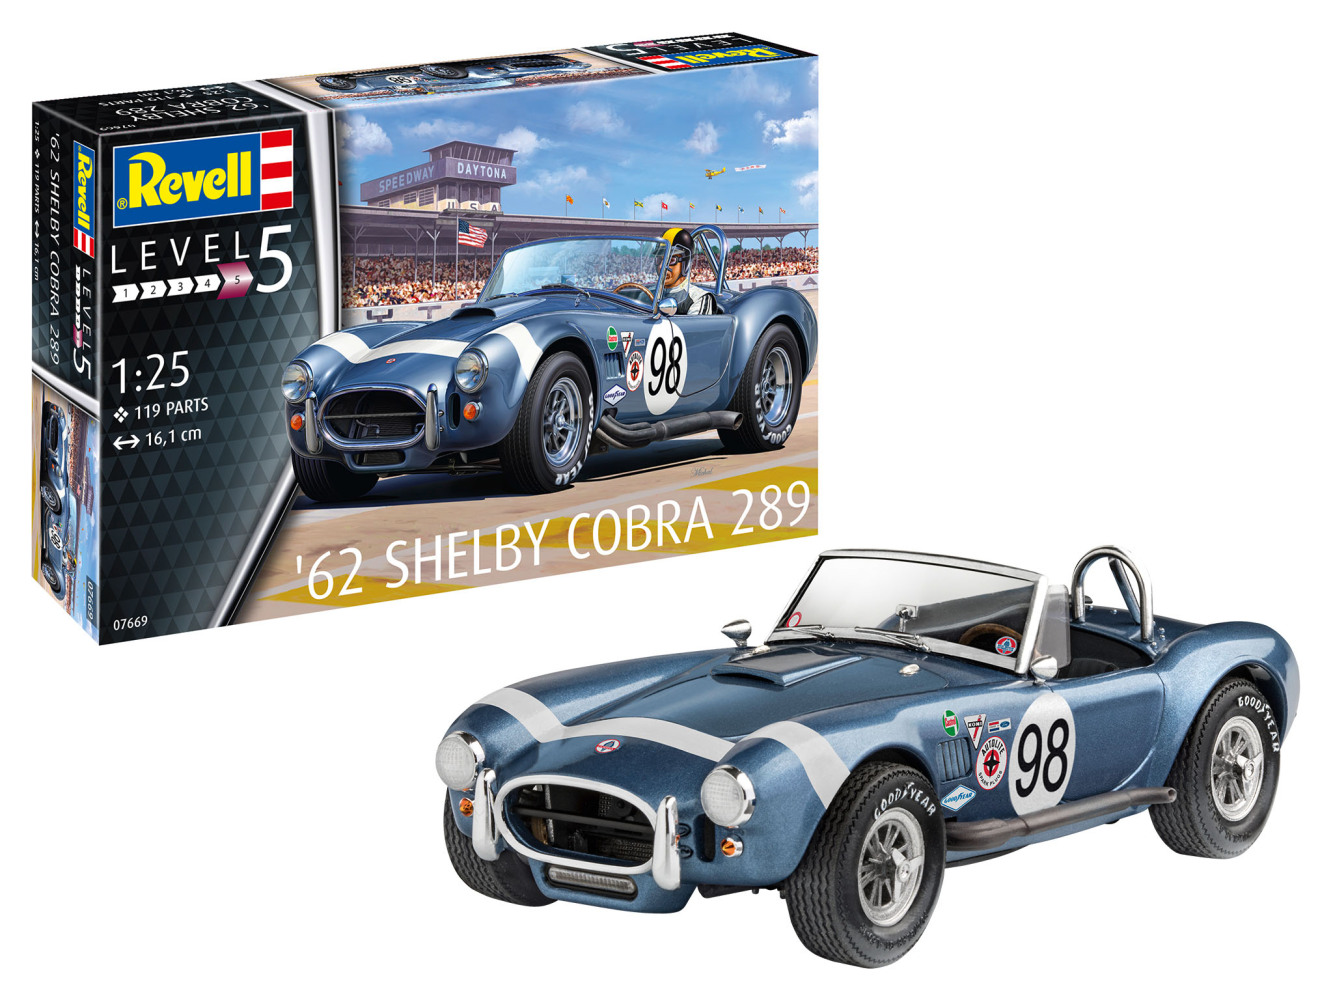 62 Shelby Cobra 289 Model Car Kit